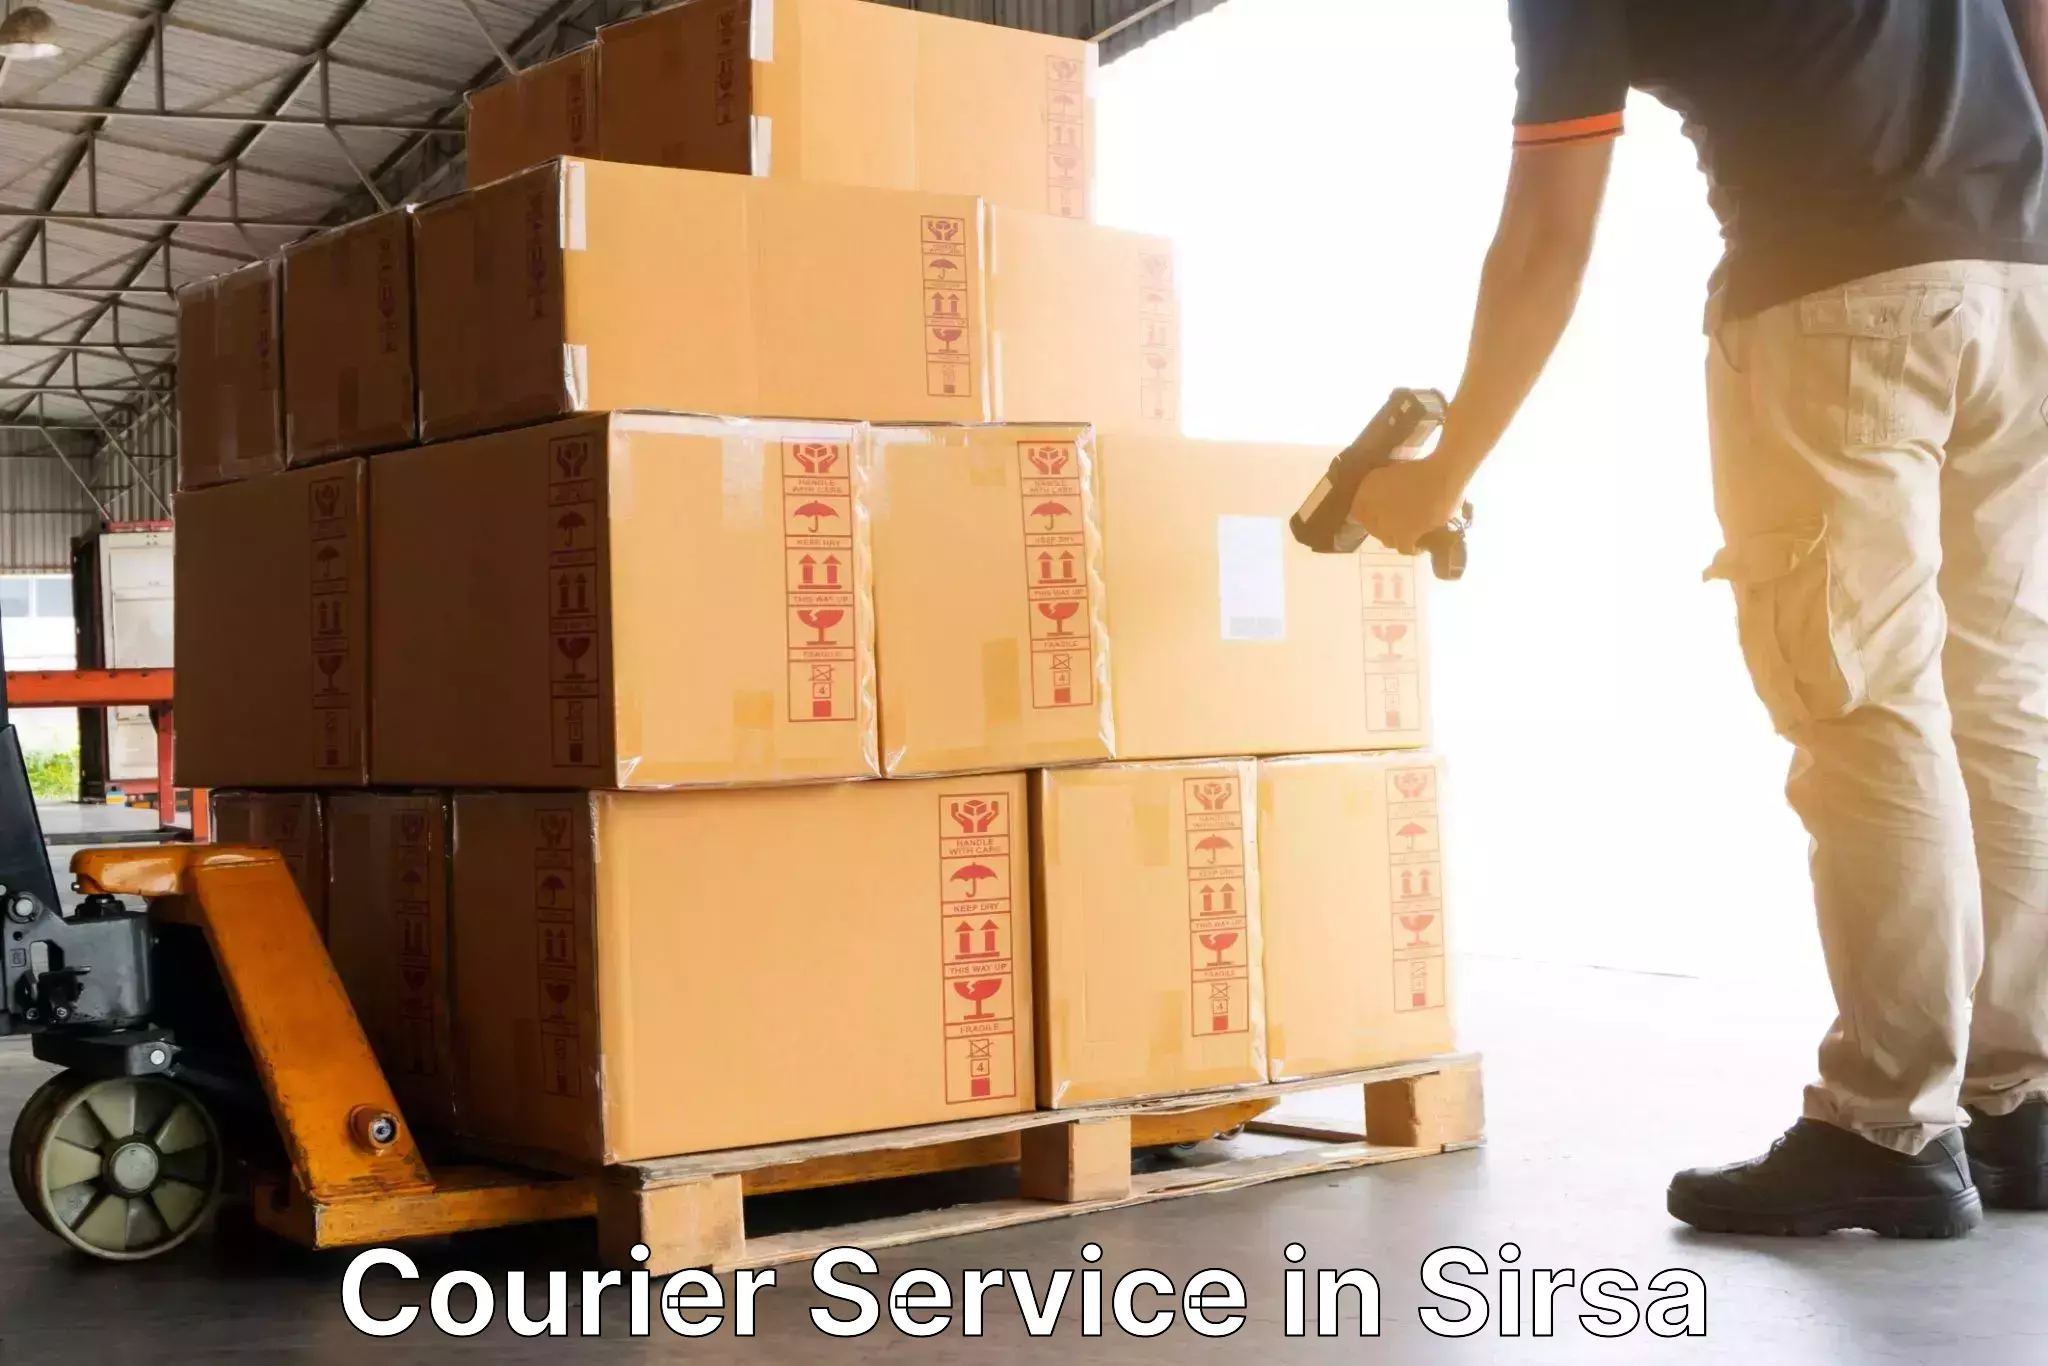 Regular parcel service in Sirsa